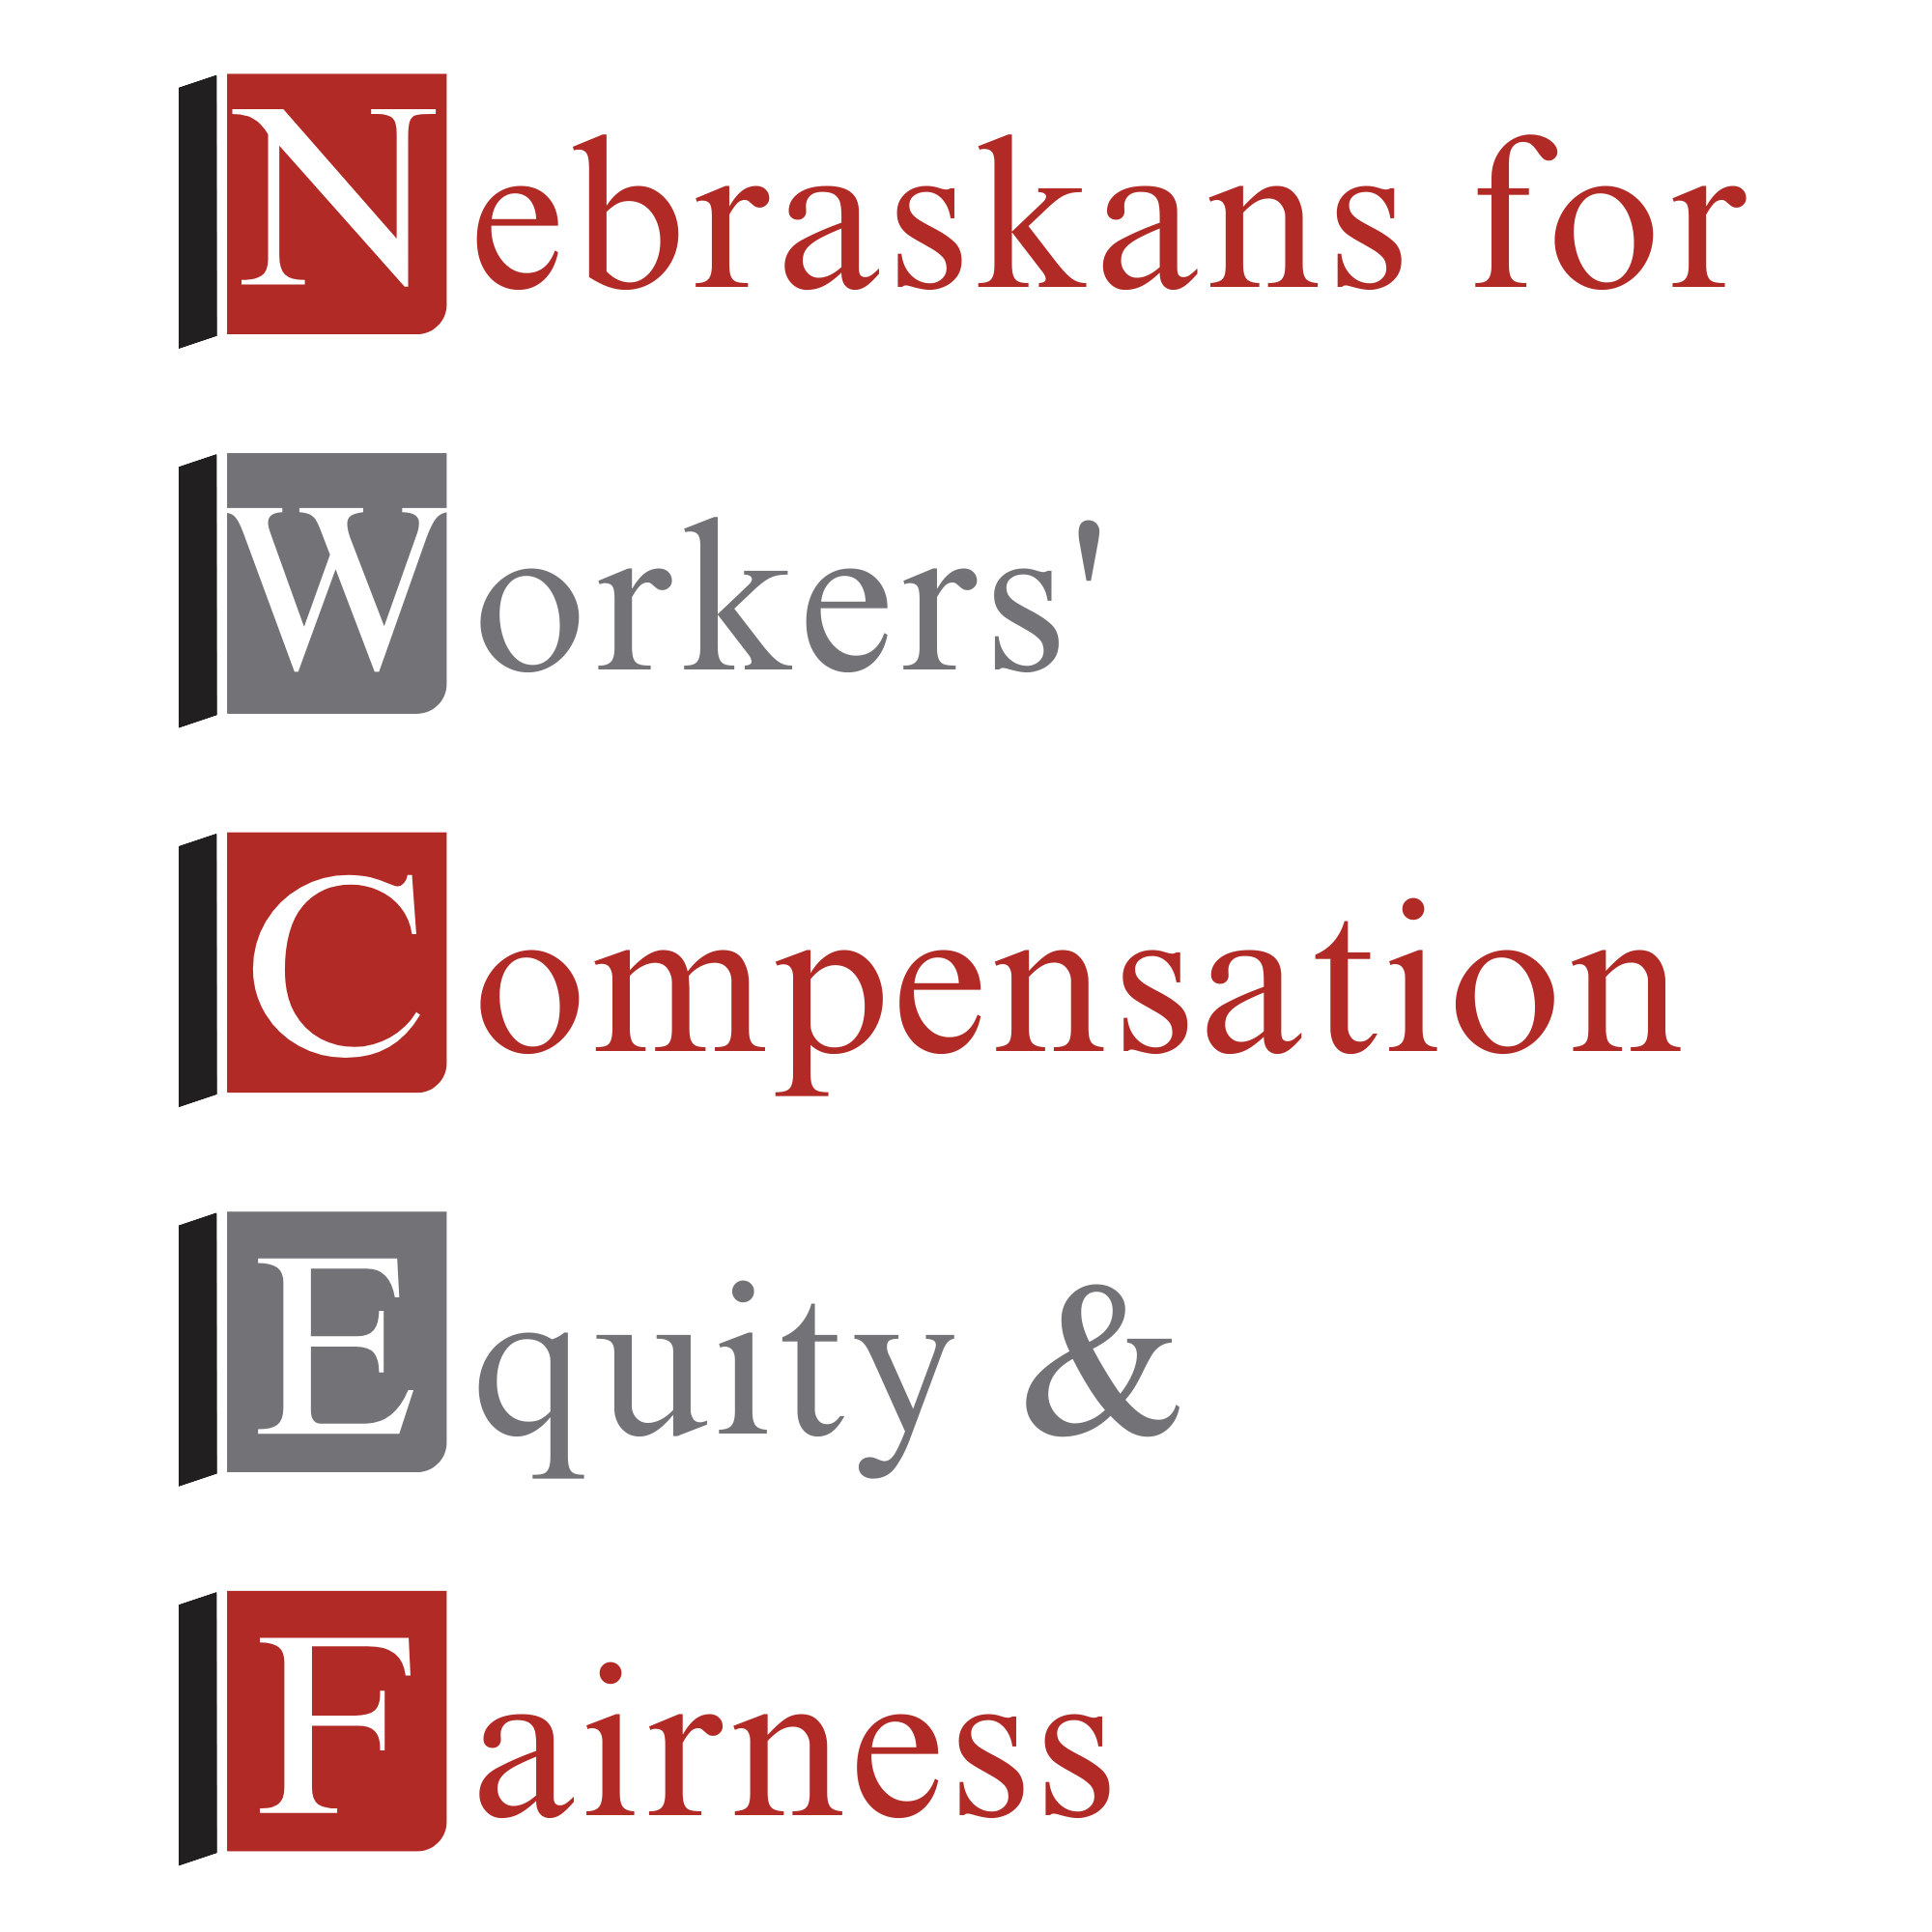 NEBRASKANS FOR WORKERS' COMPENSATION EQUITY &amp; FAIRNESS